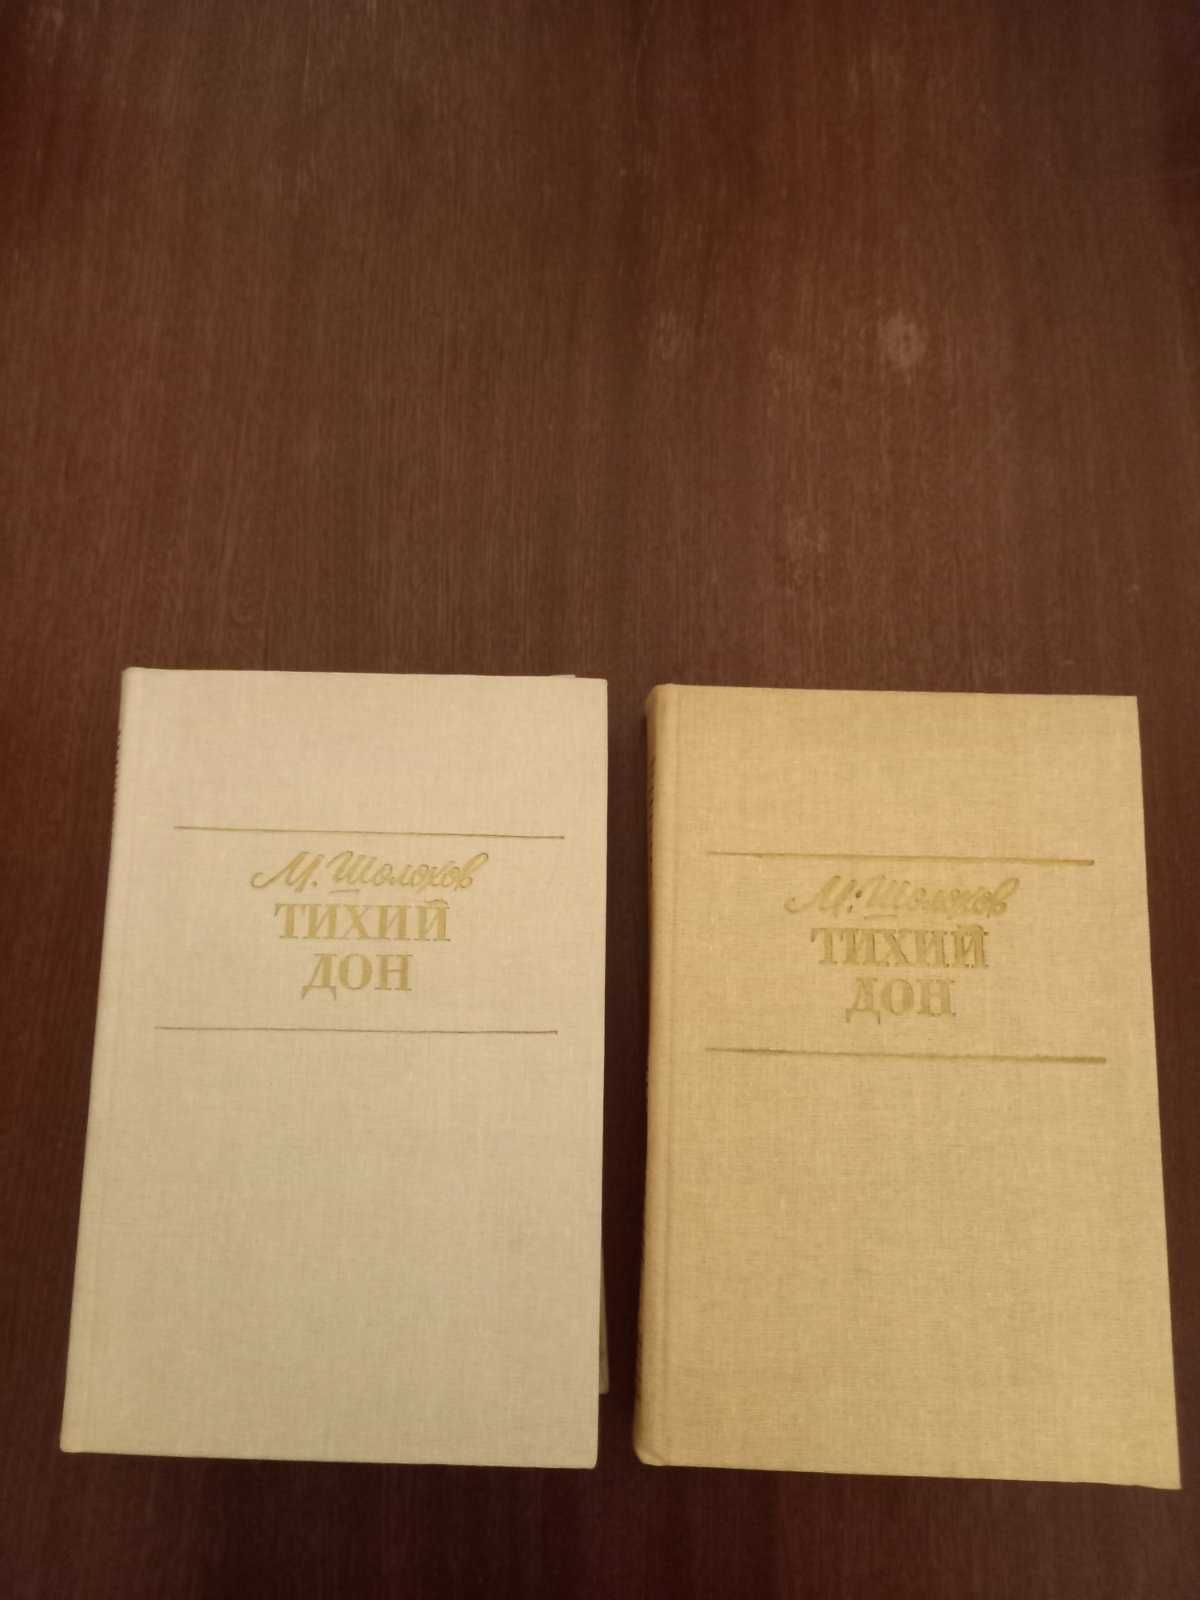 Продам книги Михаил Шолохов “Тихий дон” в 4-х томах.